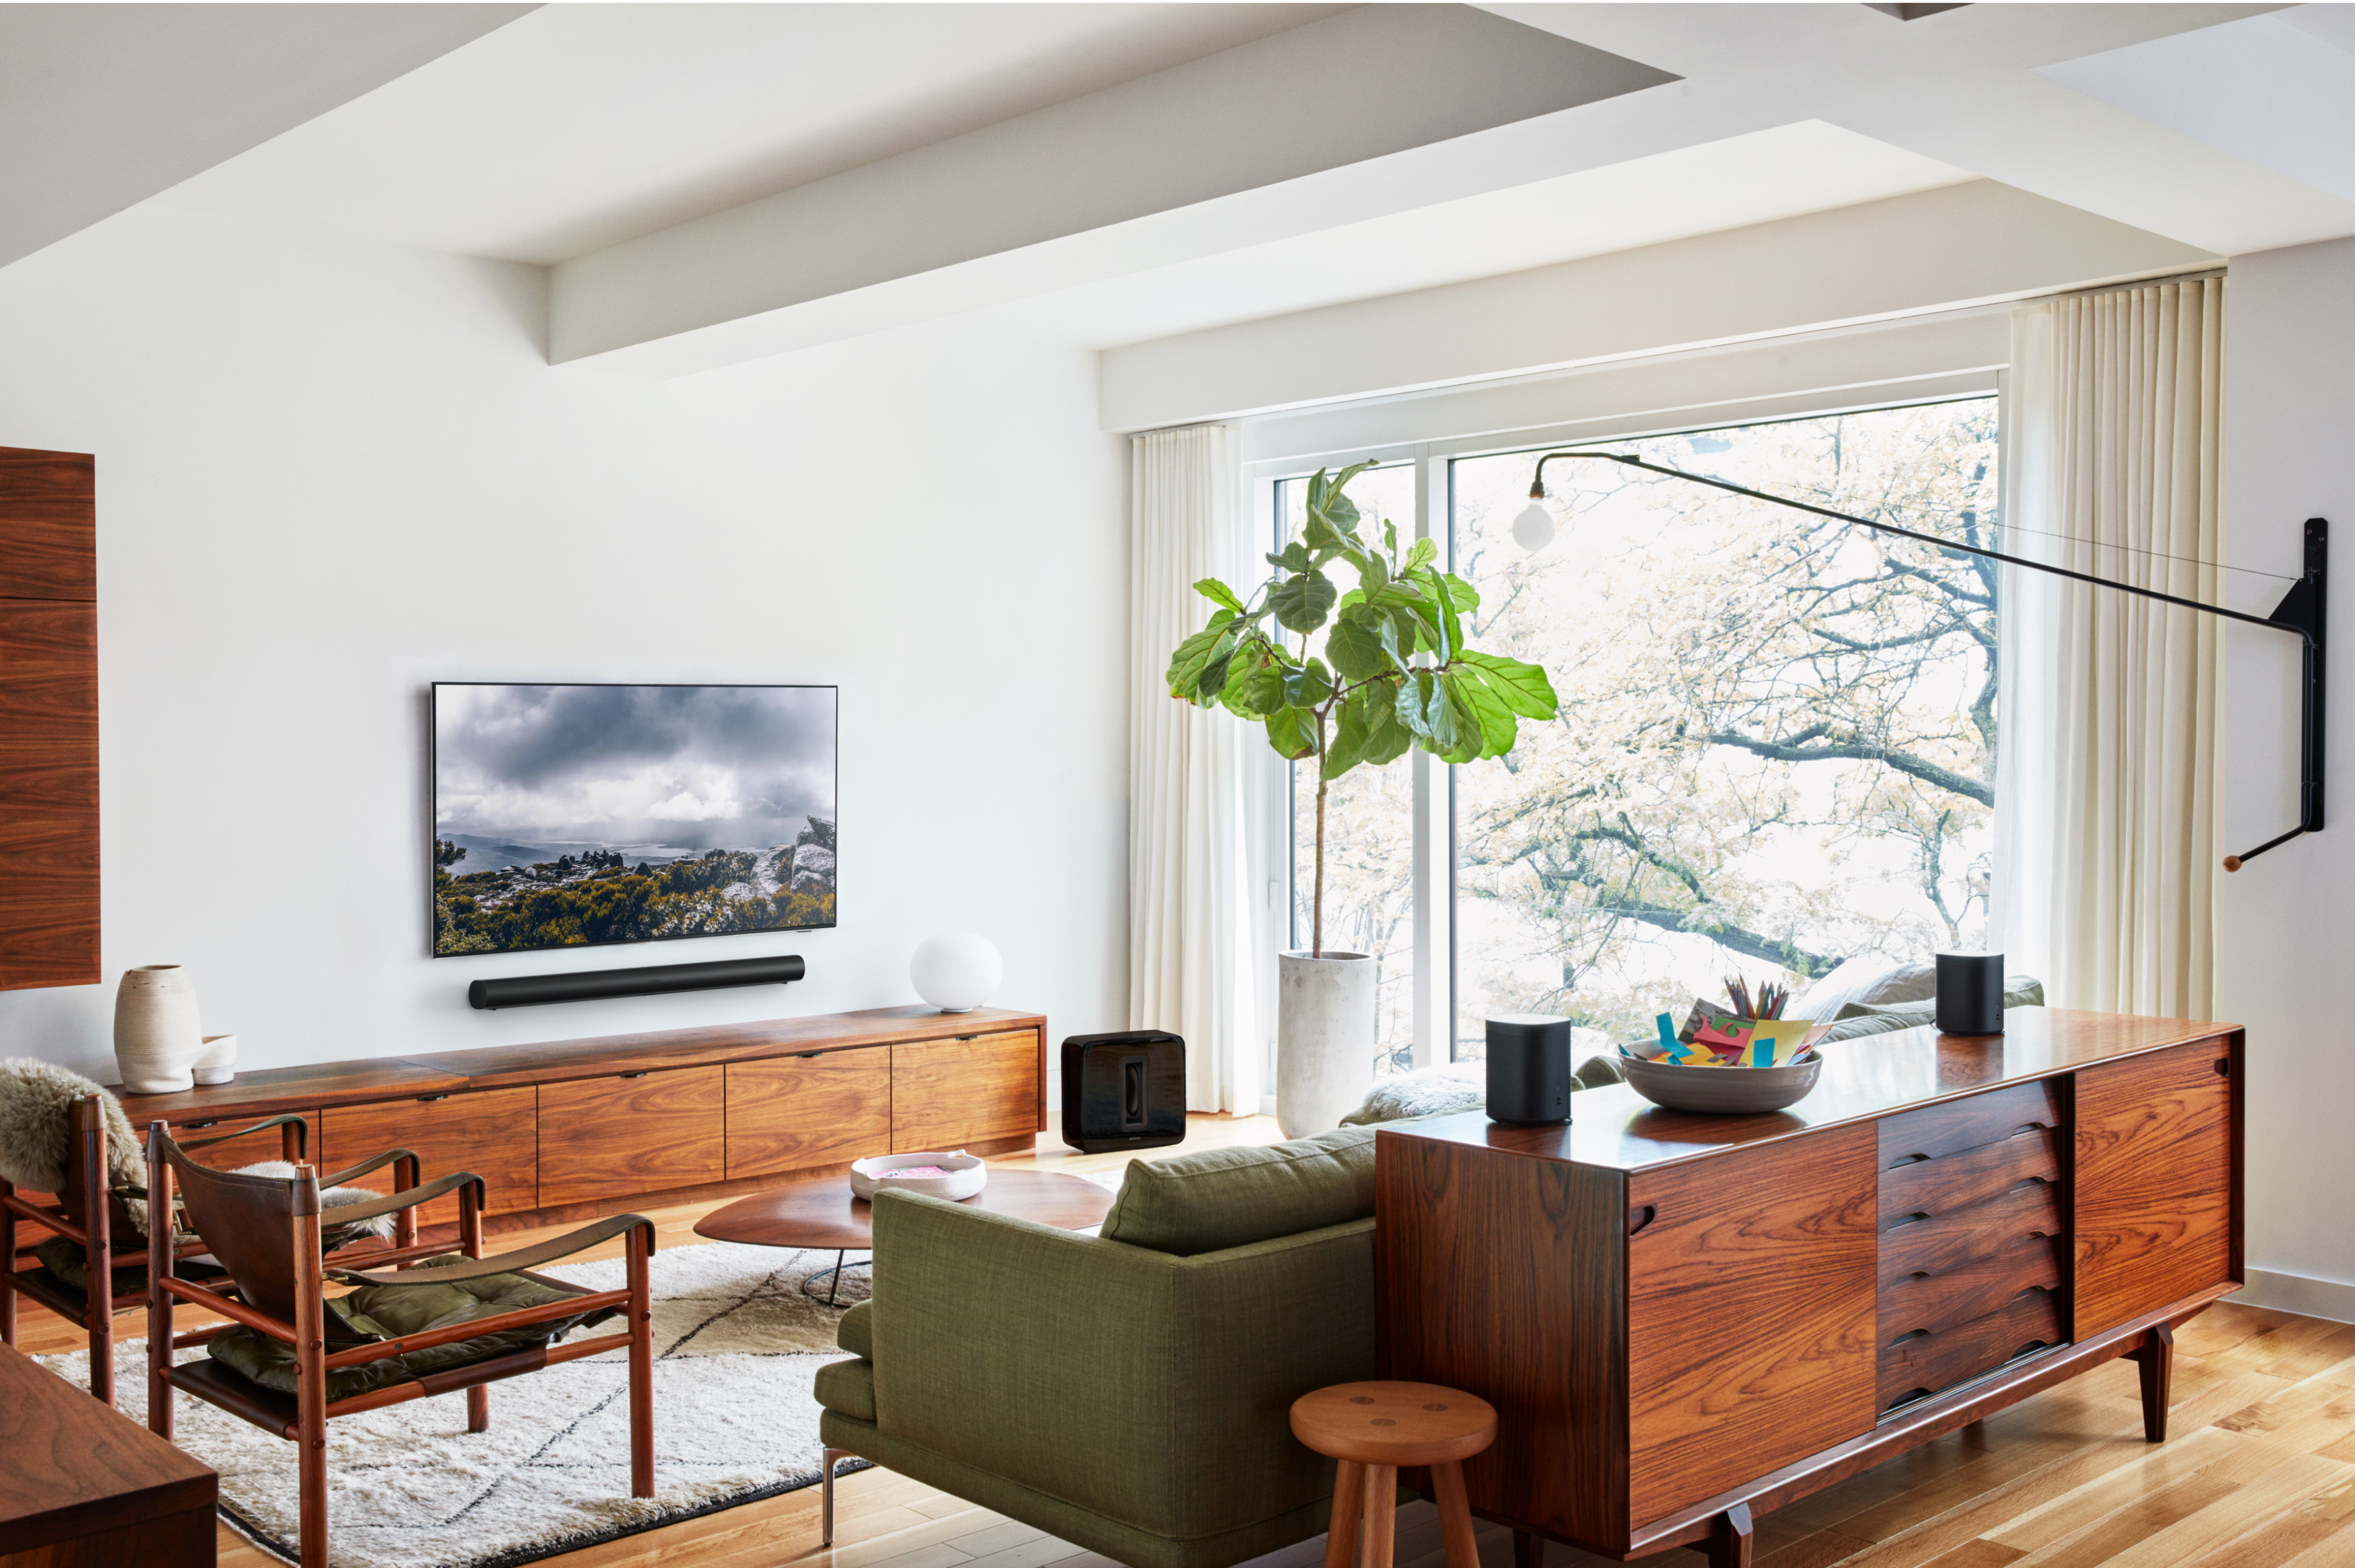 Sonos Arc in a living room